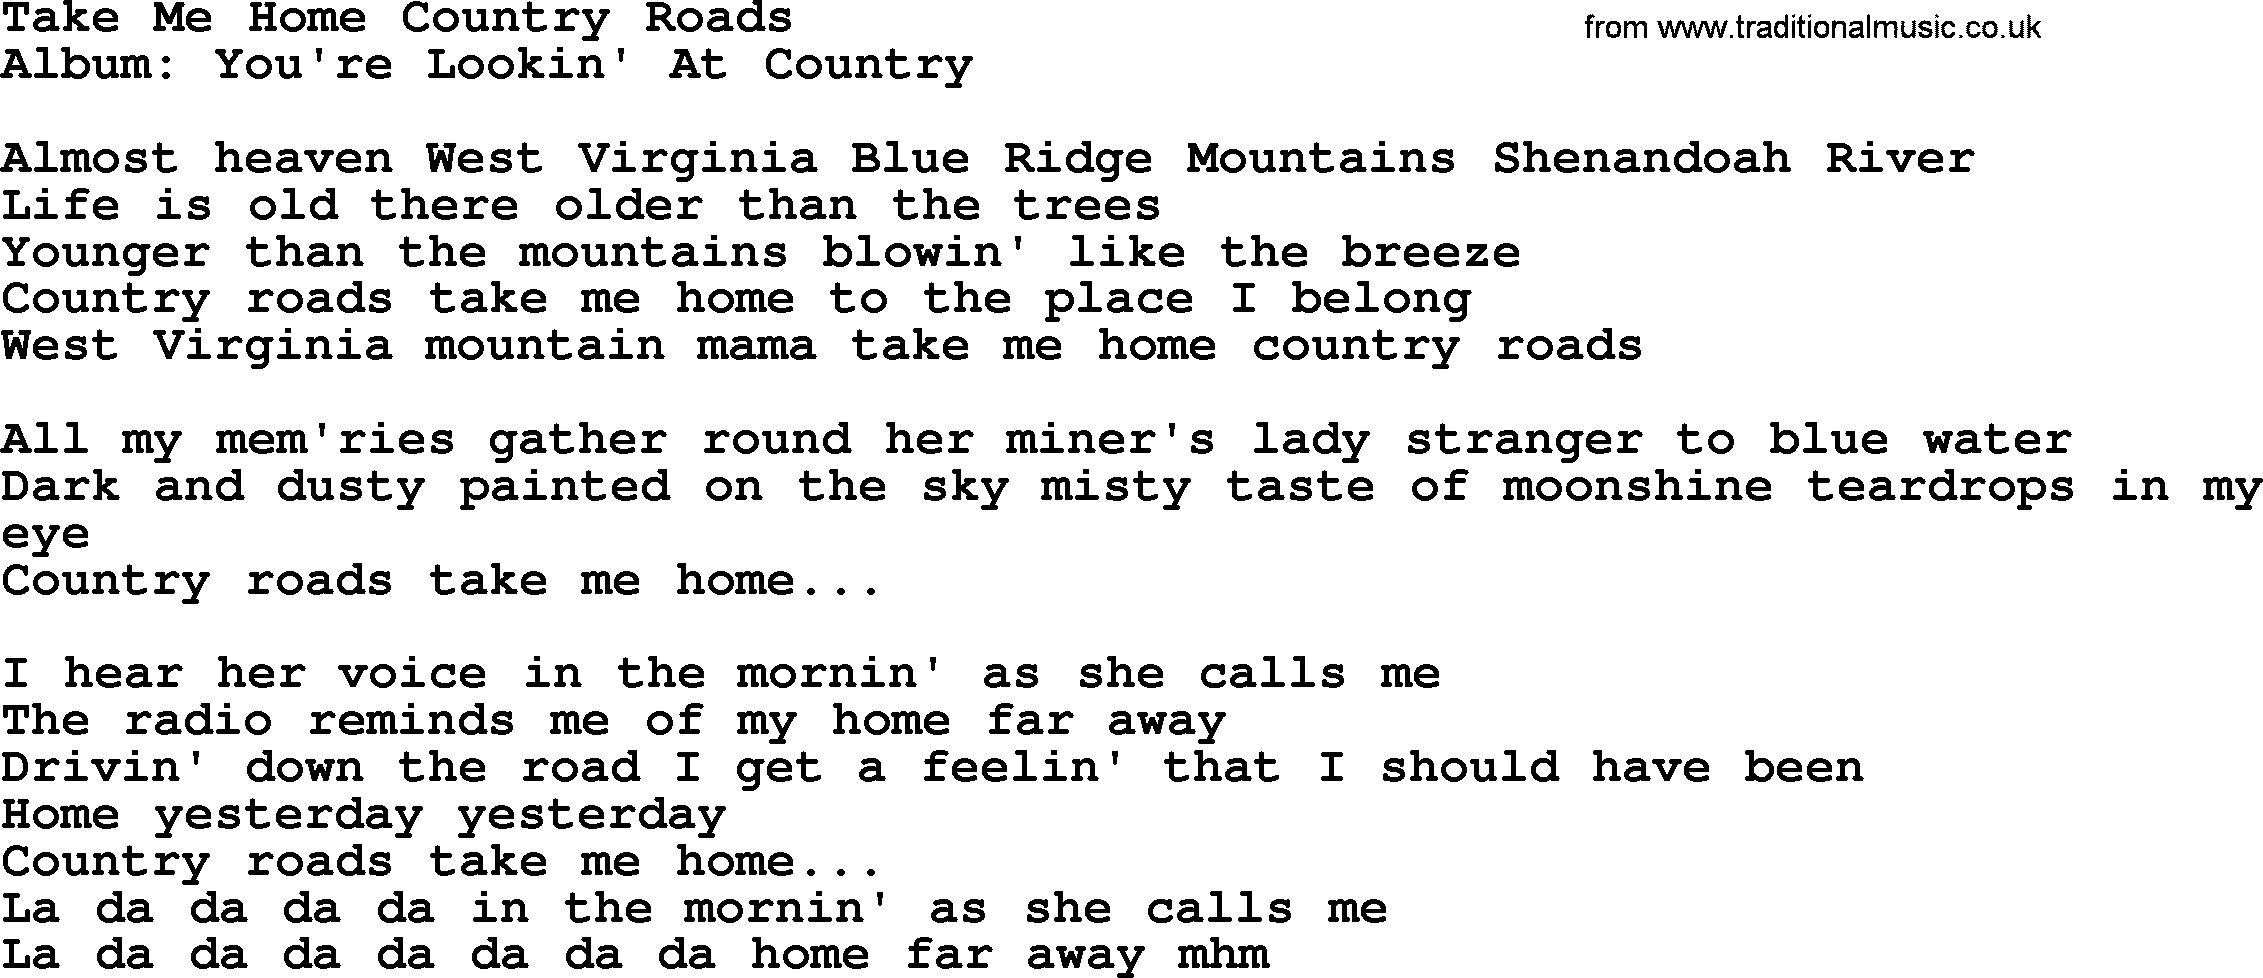 Loretta Lynn song: Take Me Home Country Roads lyrics